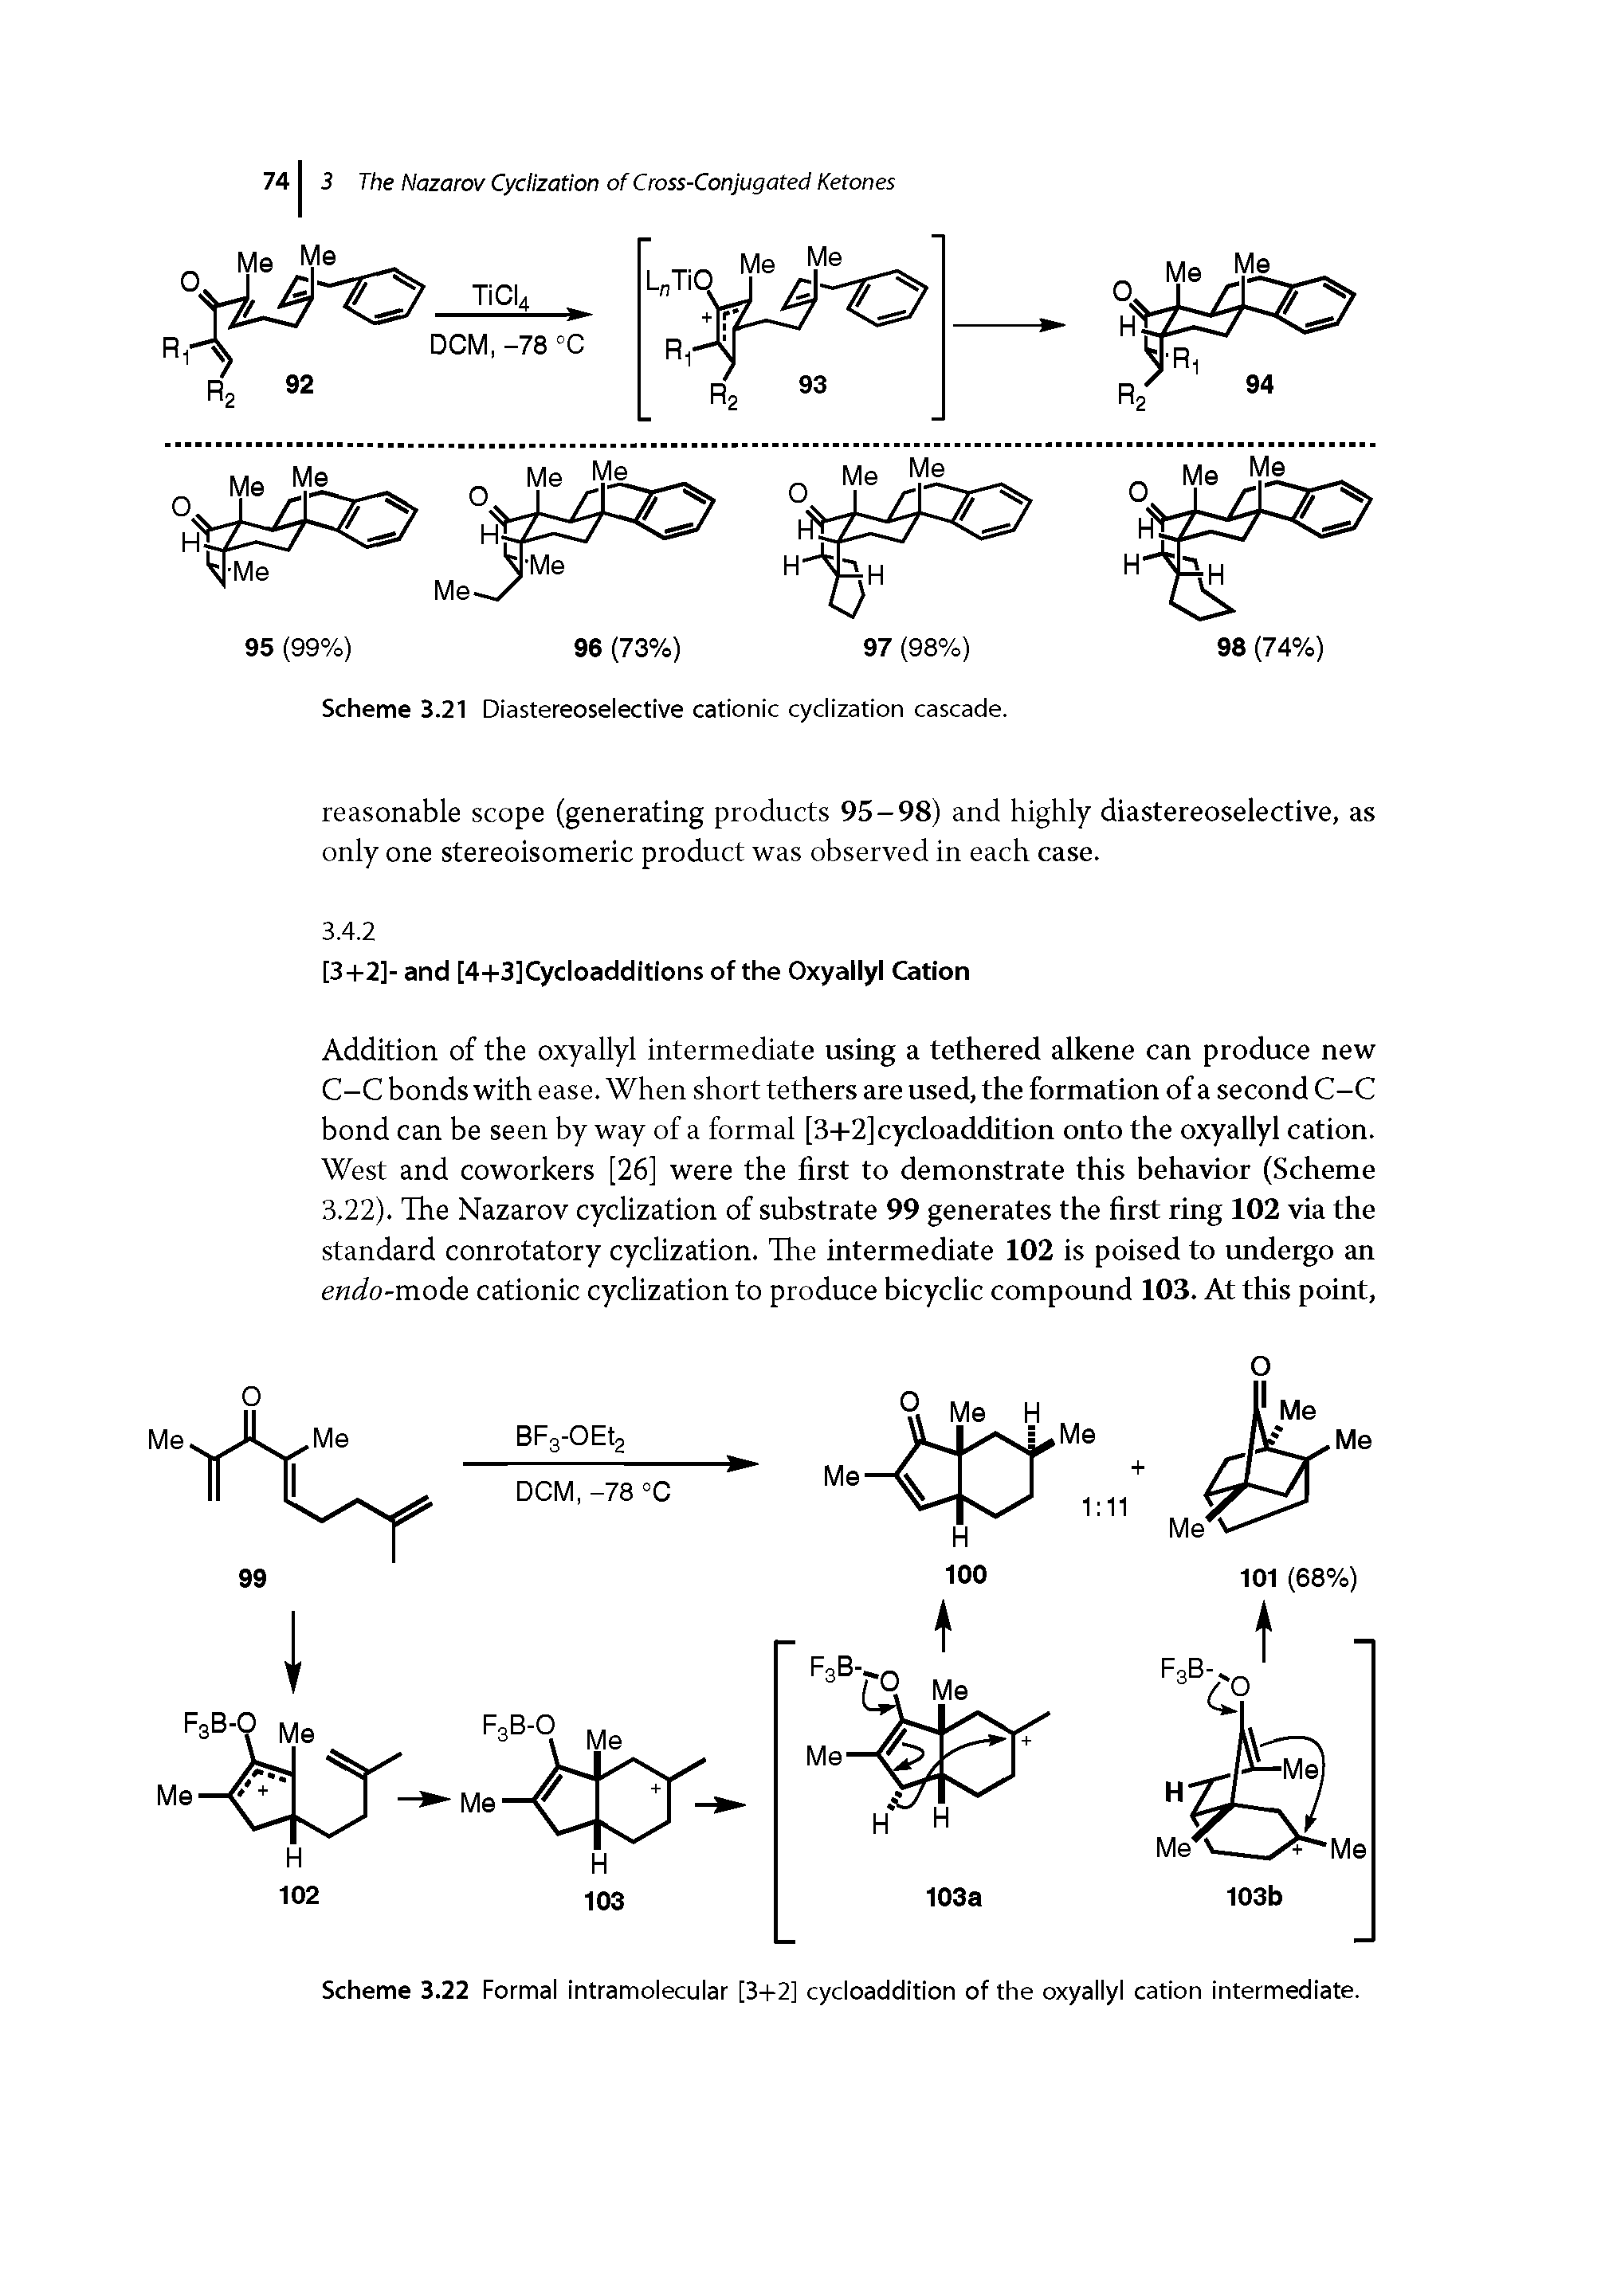 Scheme 3.22 Formal intramolecular [3+2] cycloaddition of the oxyallyl cation intermediate.